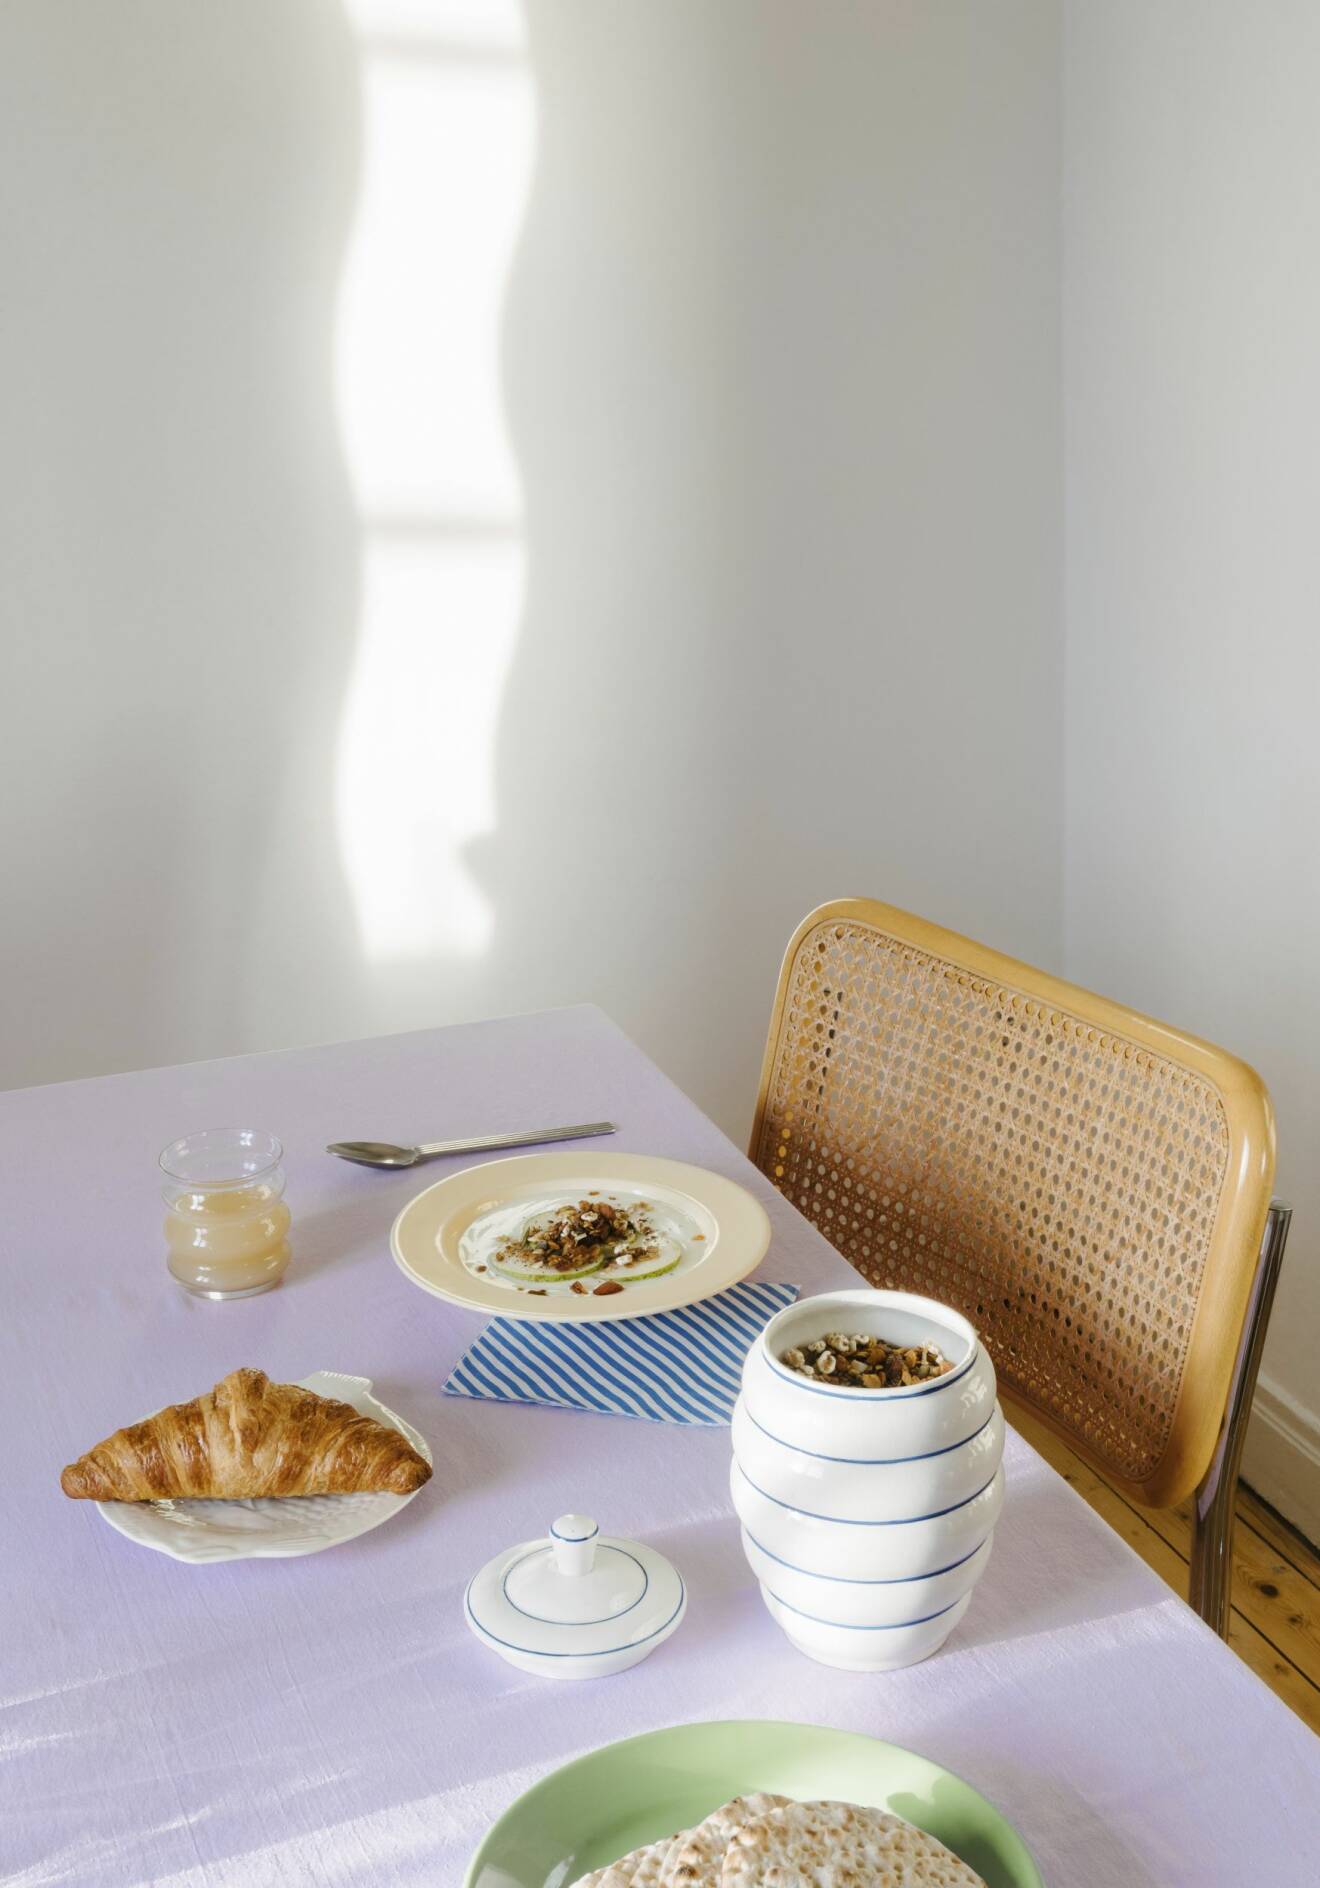 Frukost dukat på ett bord med lila duk, bredvid står en stol med rygg i korg.